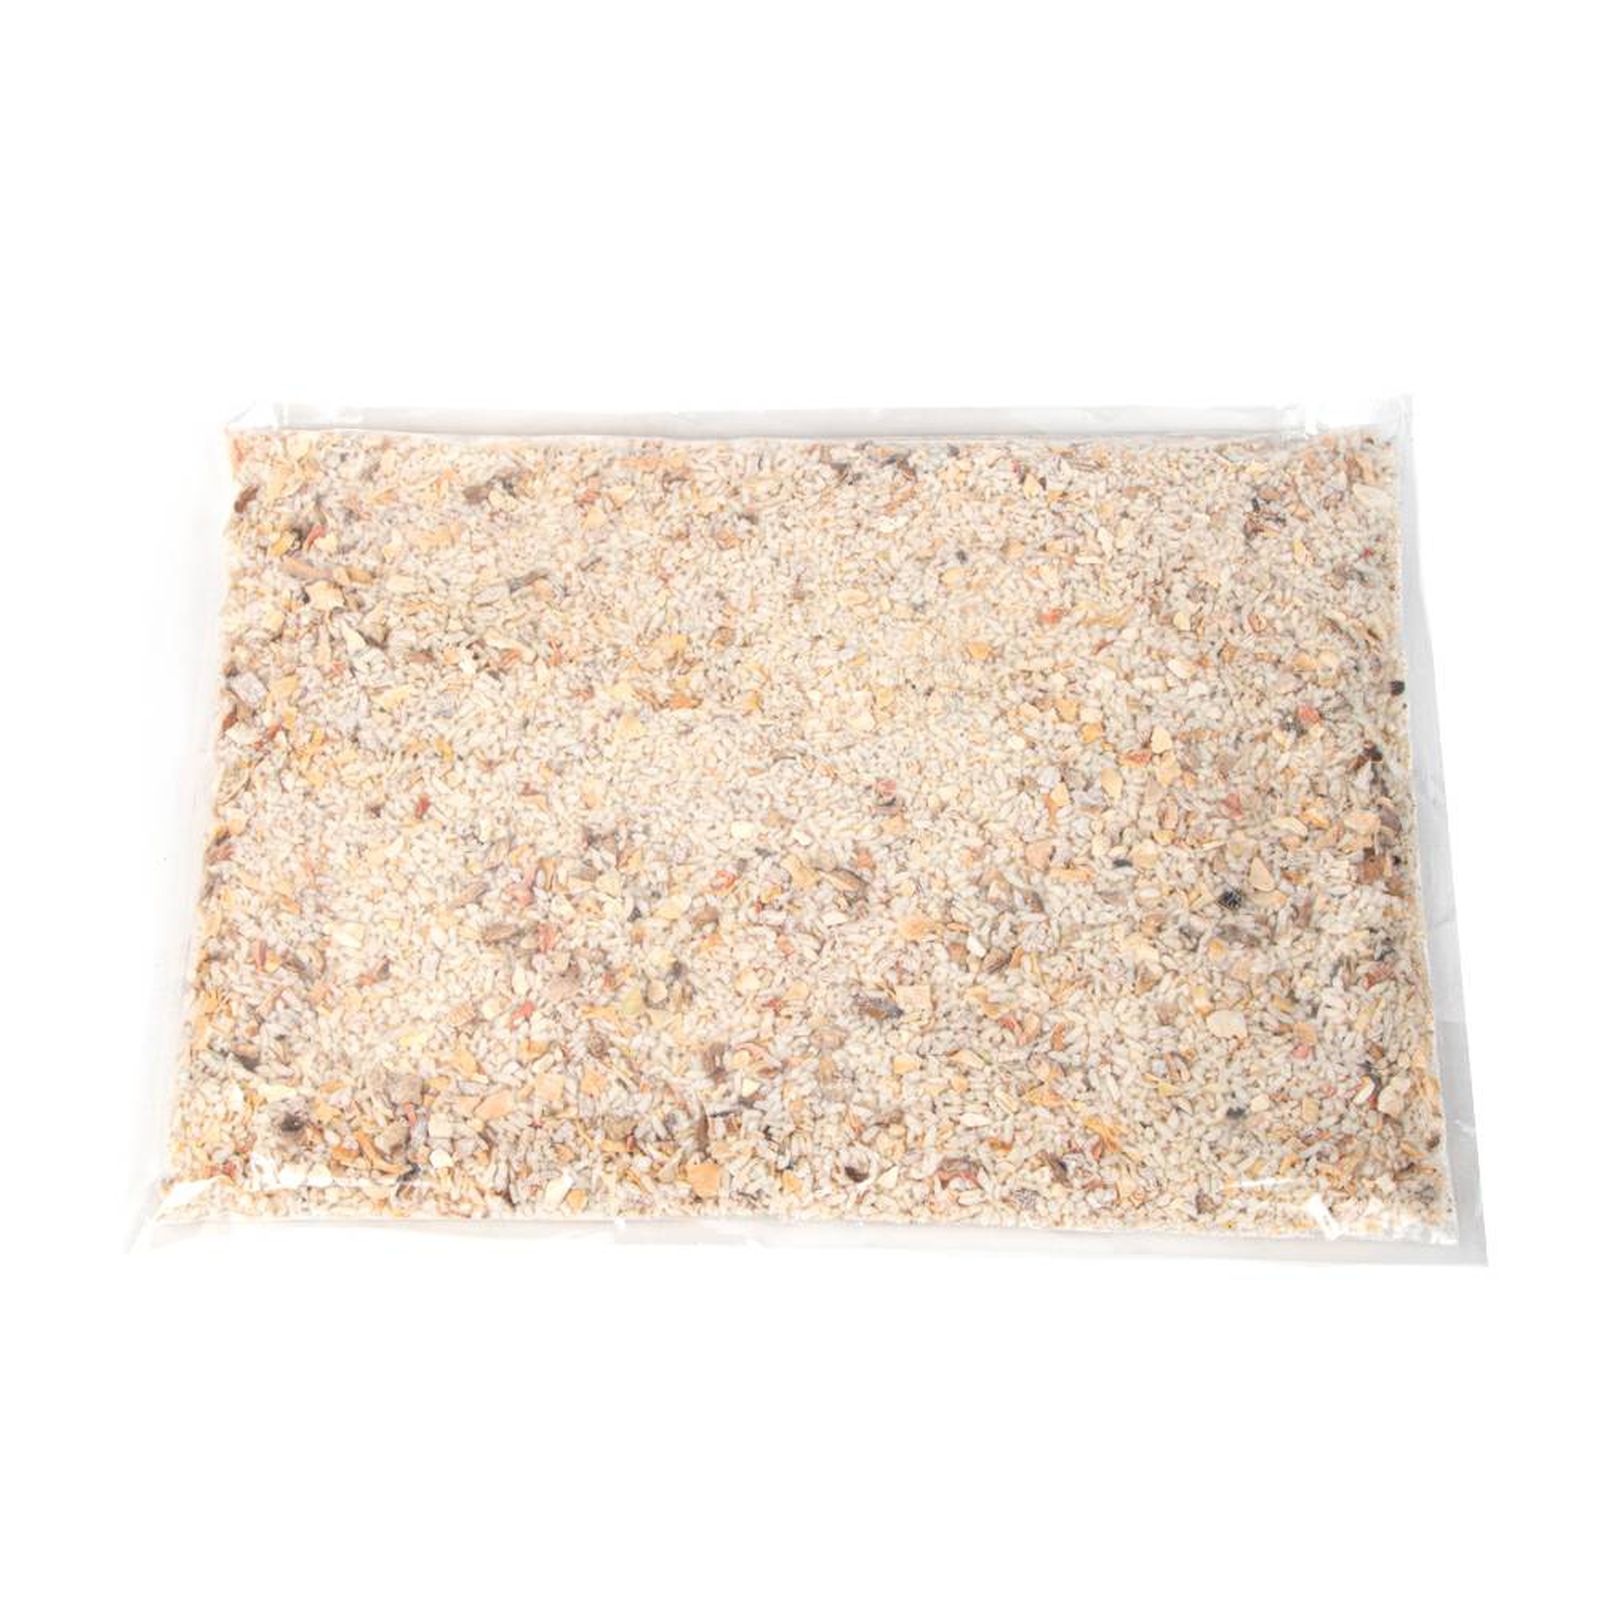 Рис Organic Food с грибами НТВ, 1 кг